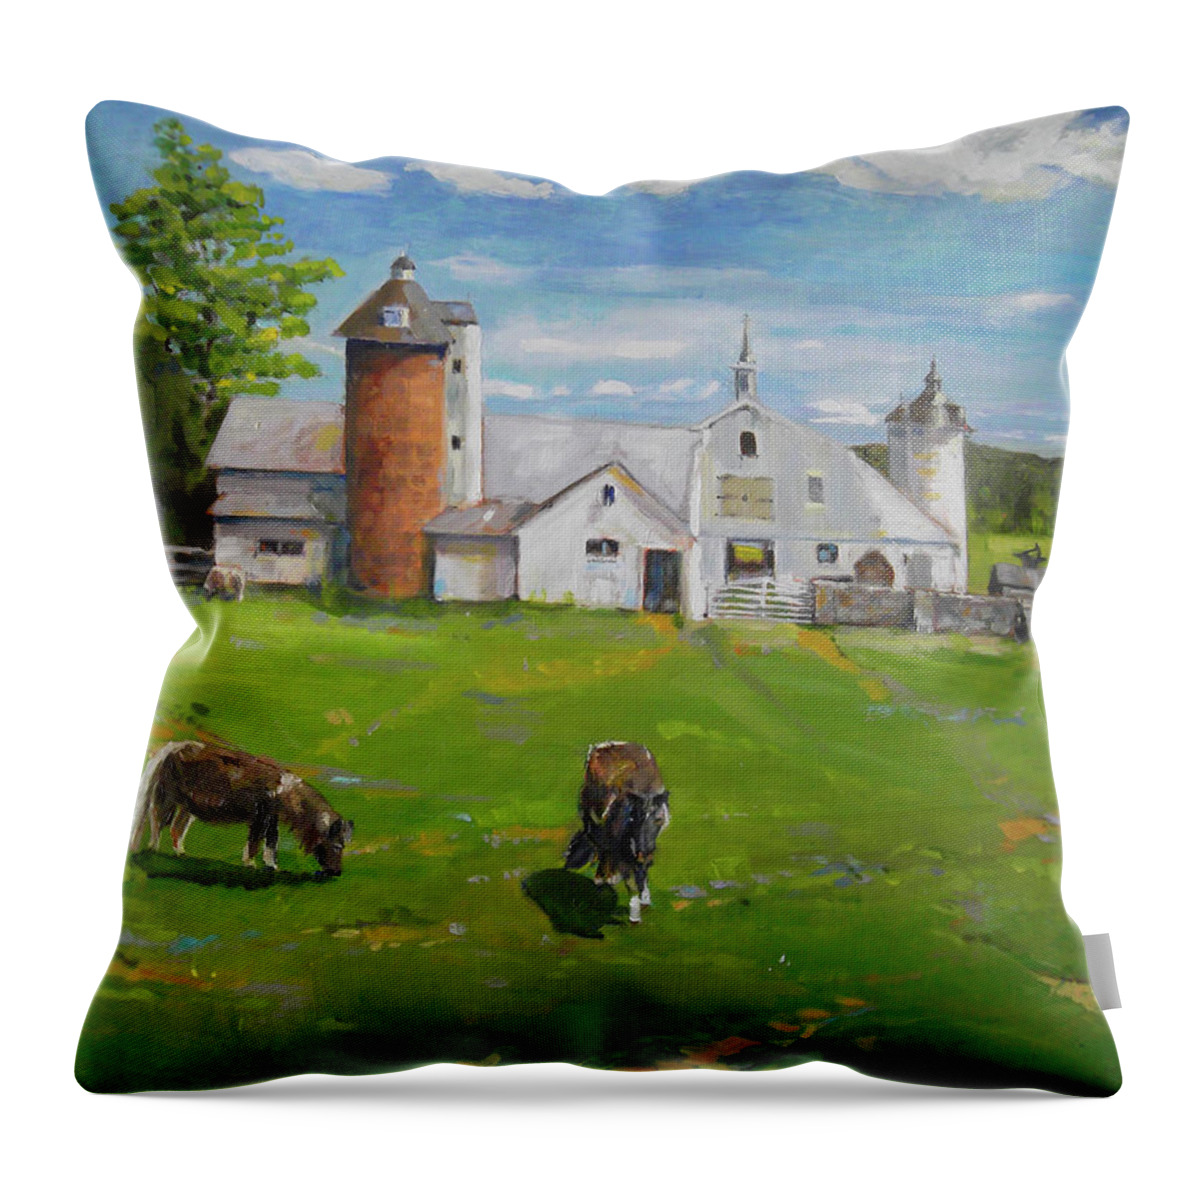 Elm Grove Throw Pillow featuring the painting Elm Grove Farm by Susan Esbensen